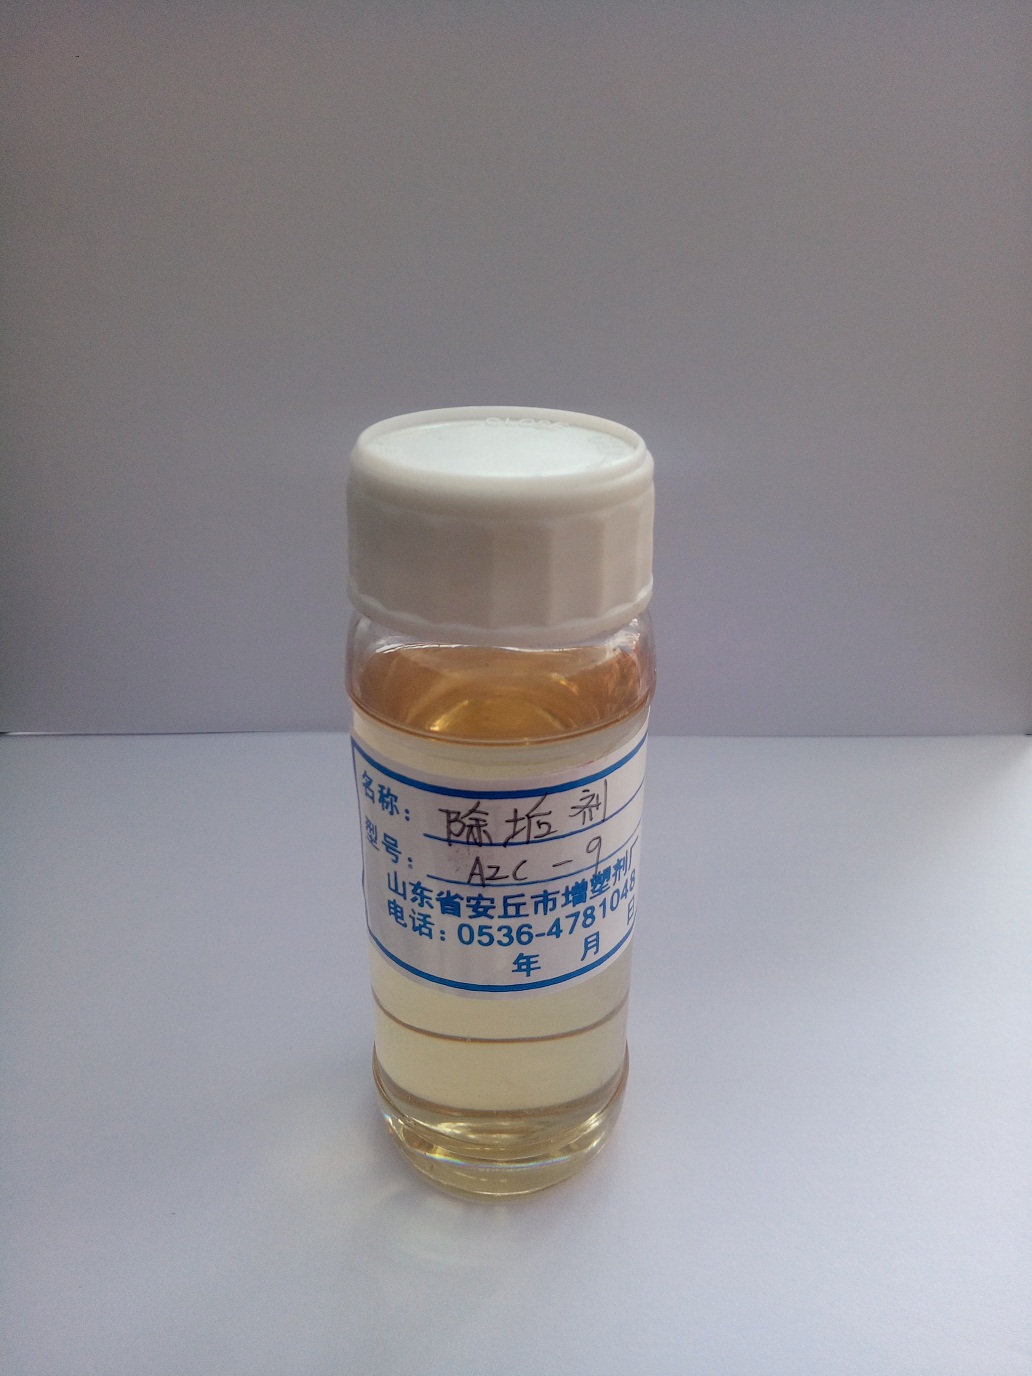 AZC-9除垢剂